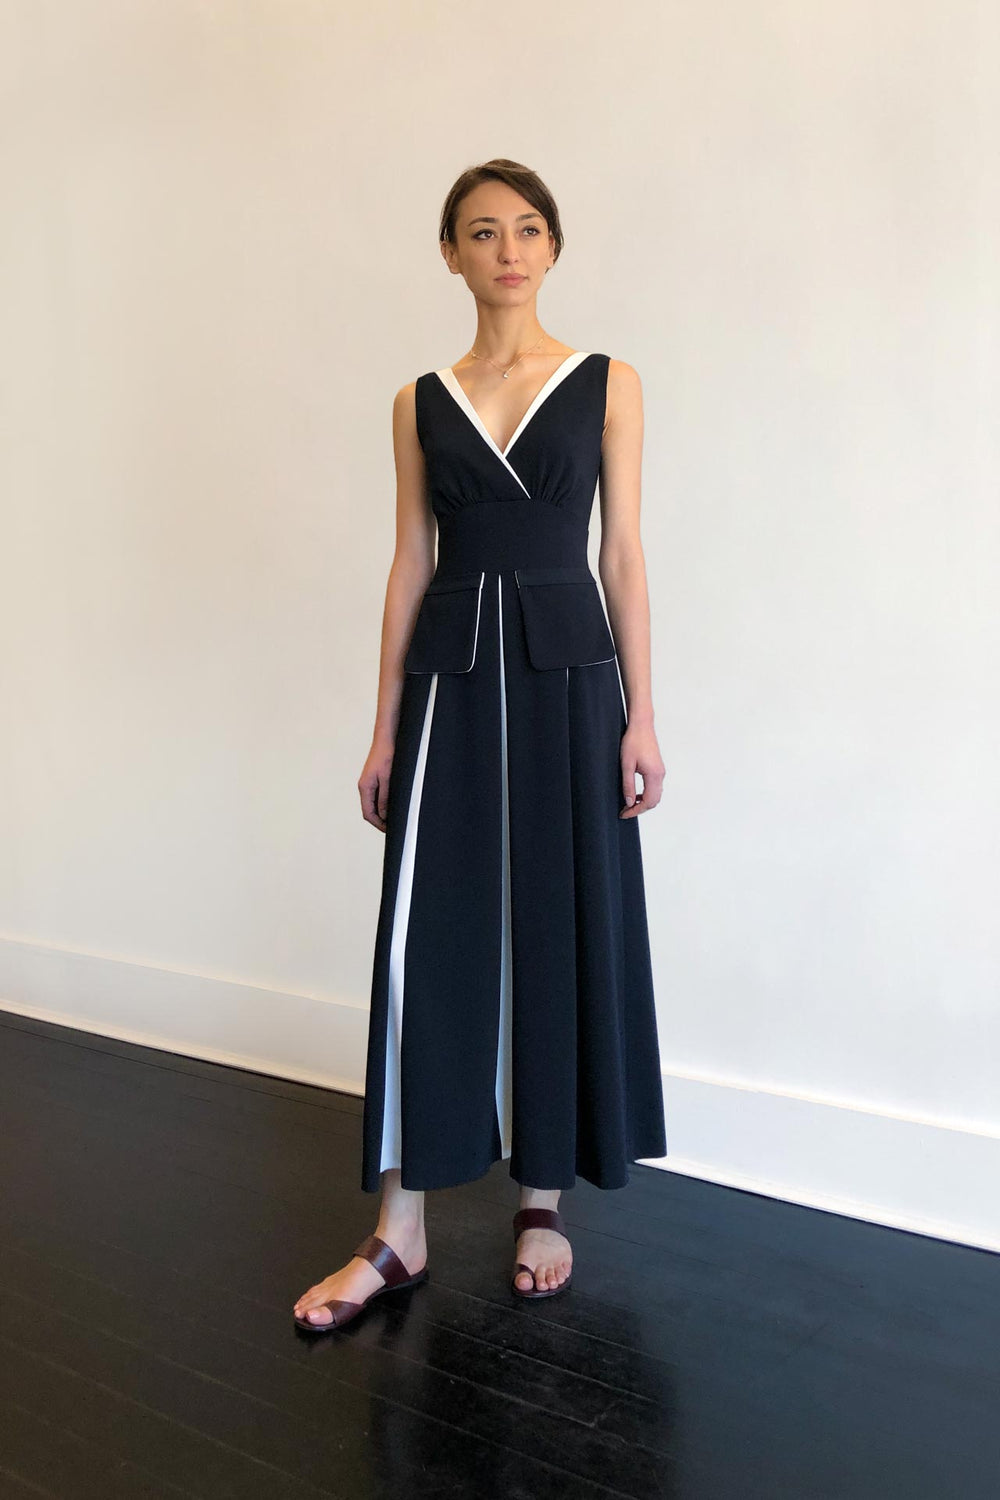 Fashion Designer CARL KAPP collection | Bella Dress Navy | Sydney Australia